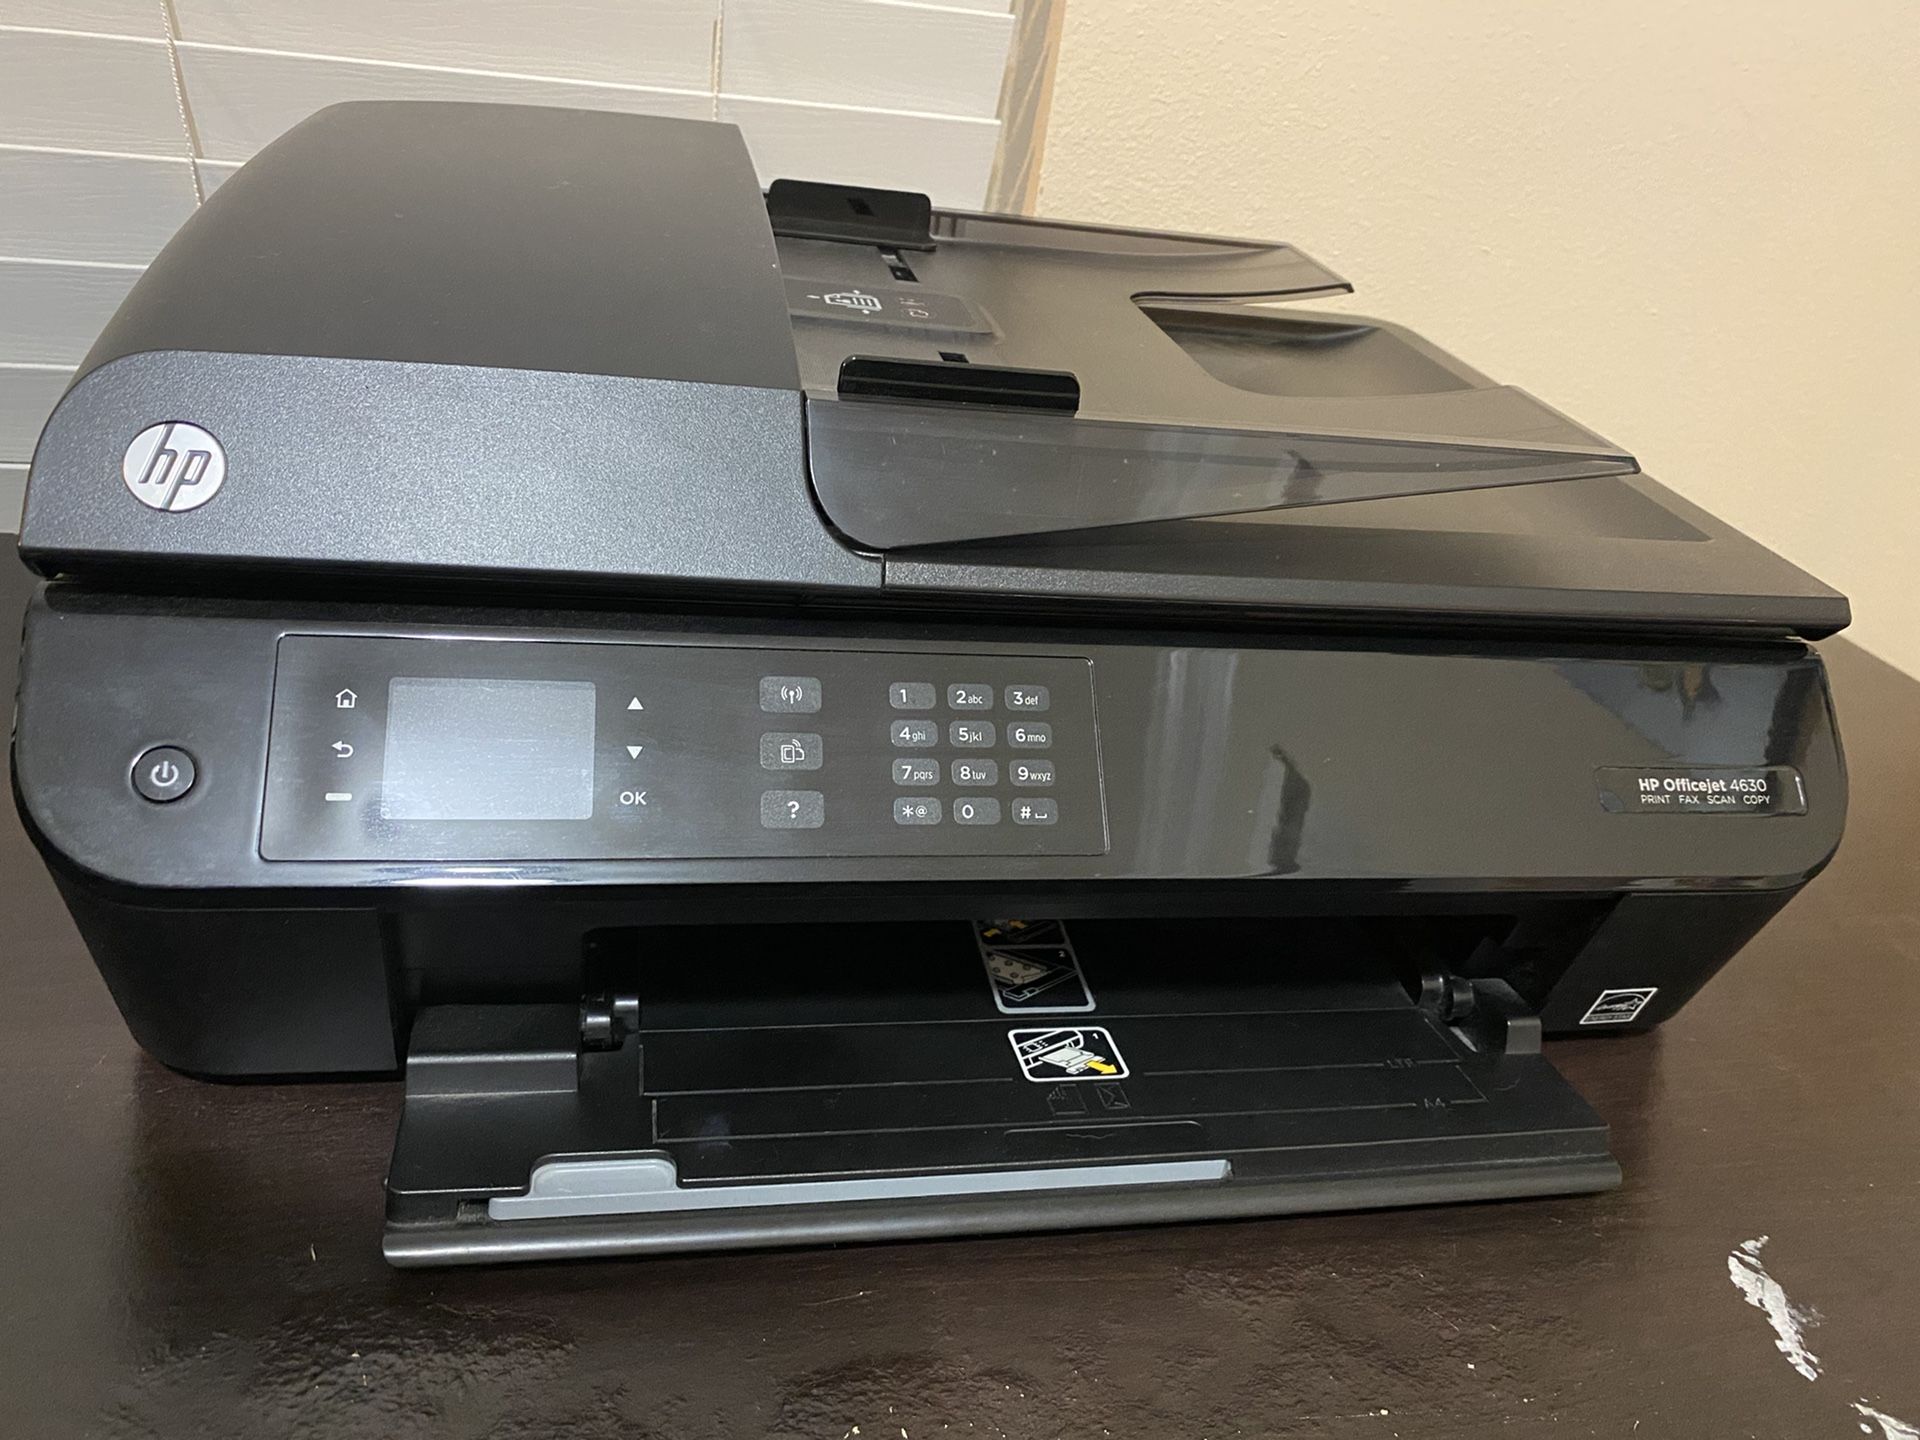 HP Printer, Scanner, Fax Machine